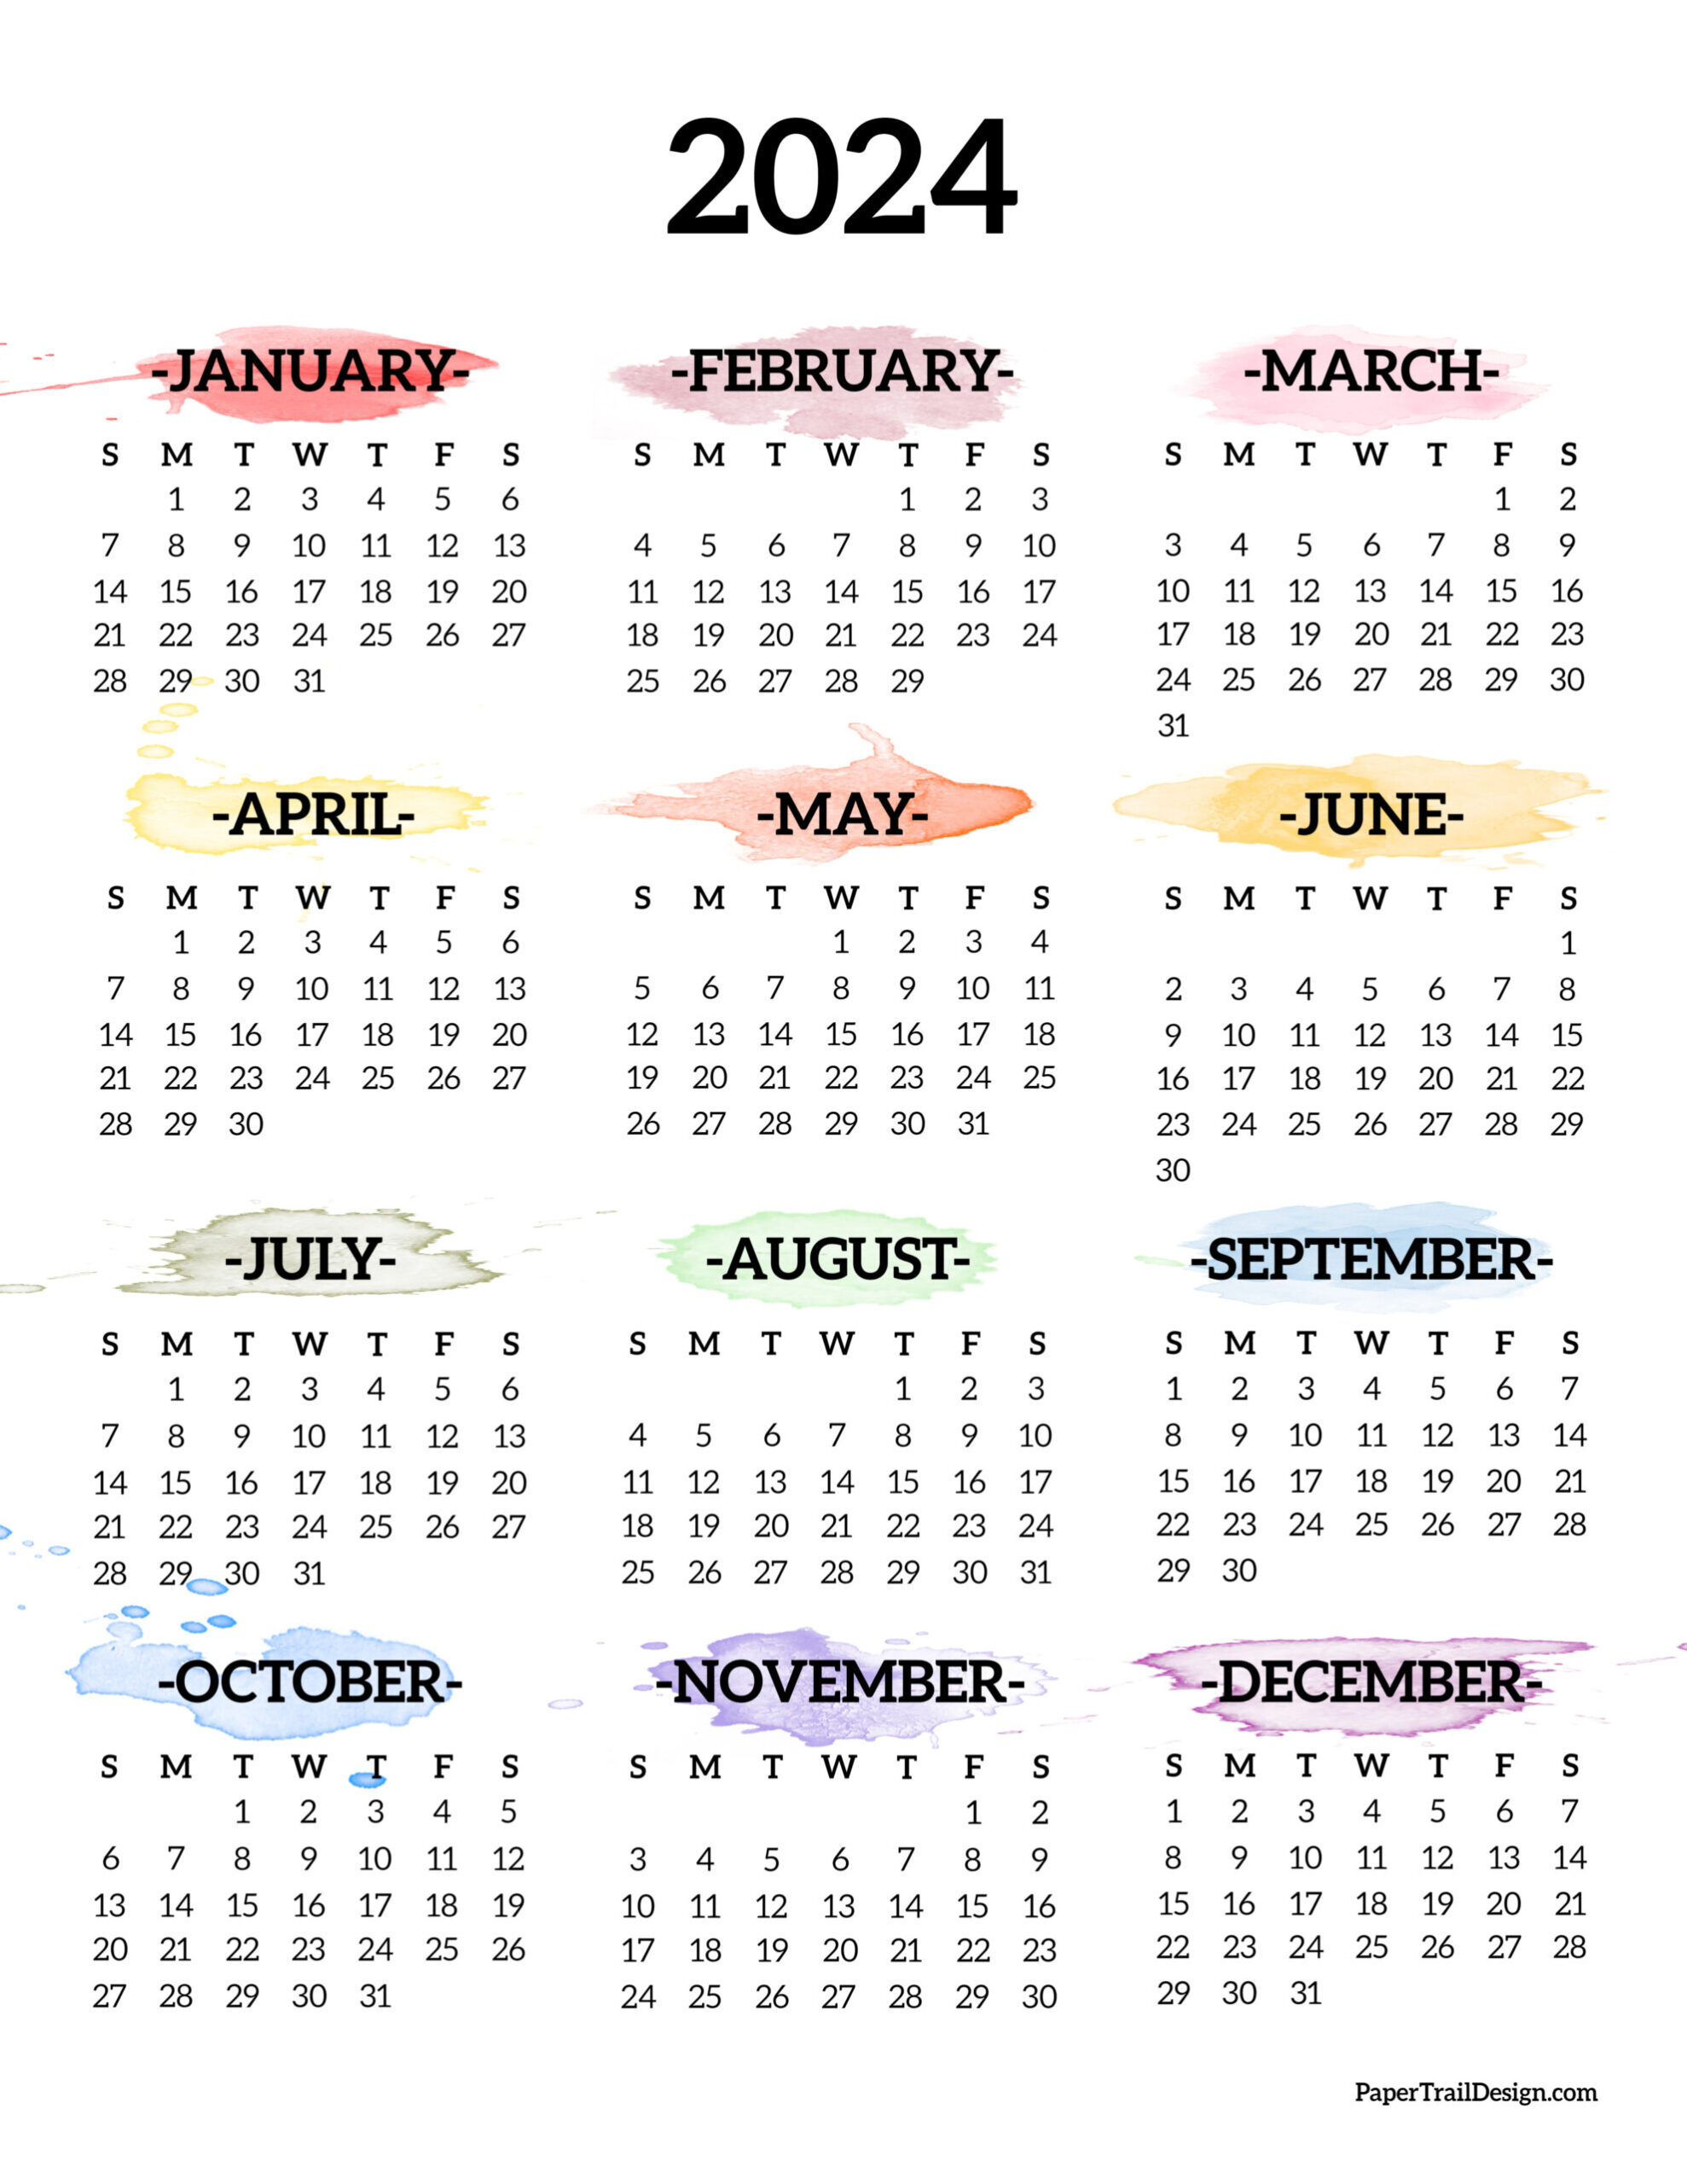 Calendar 2024 Printable One Page - Paper Trail Design | Calendar 2024 To Print